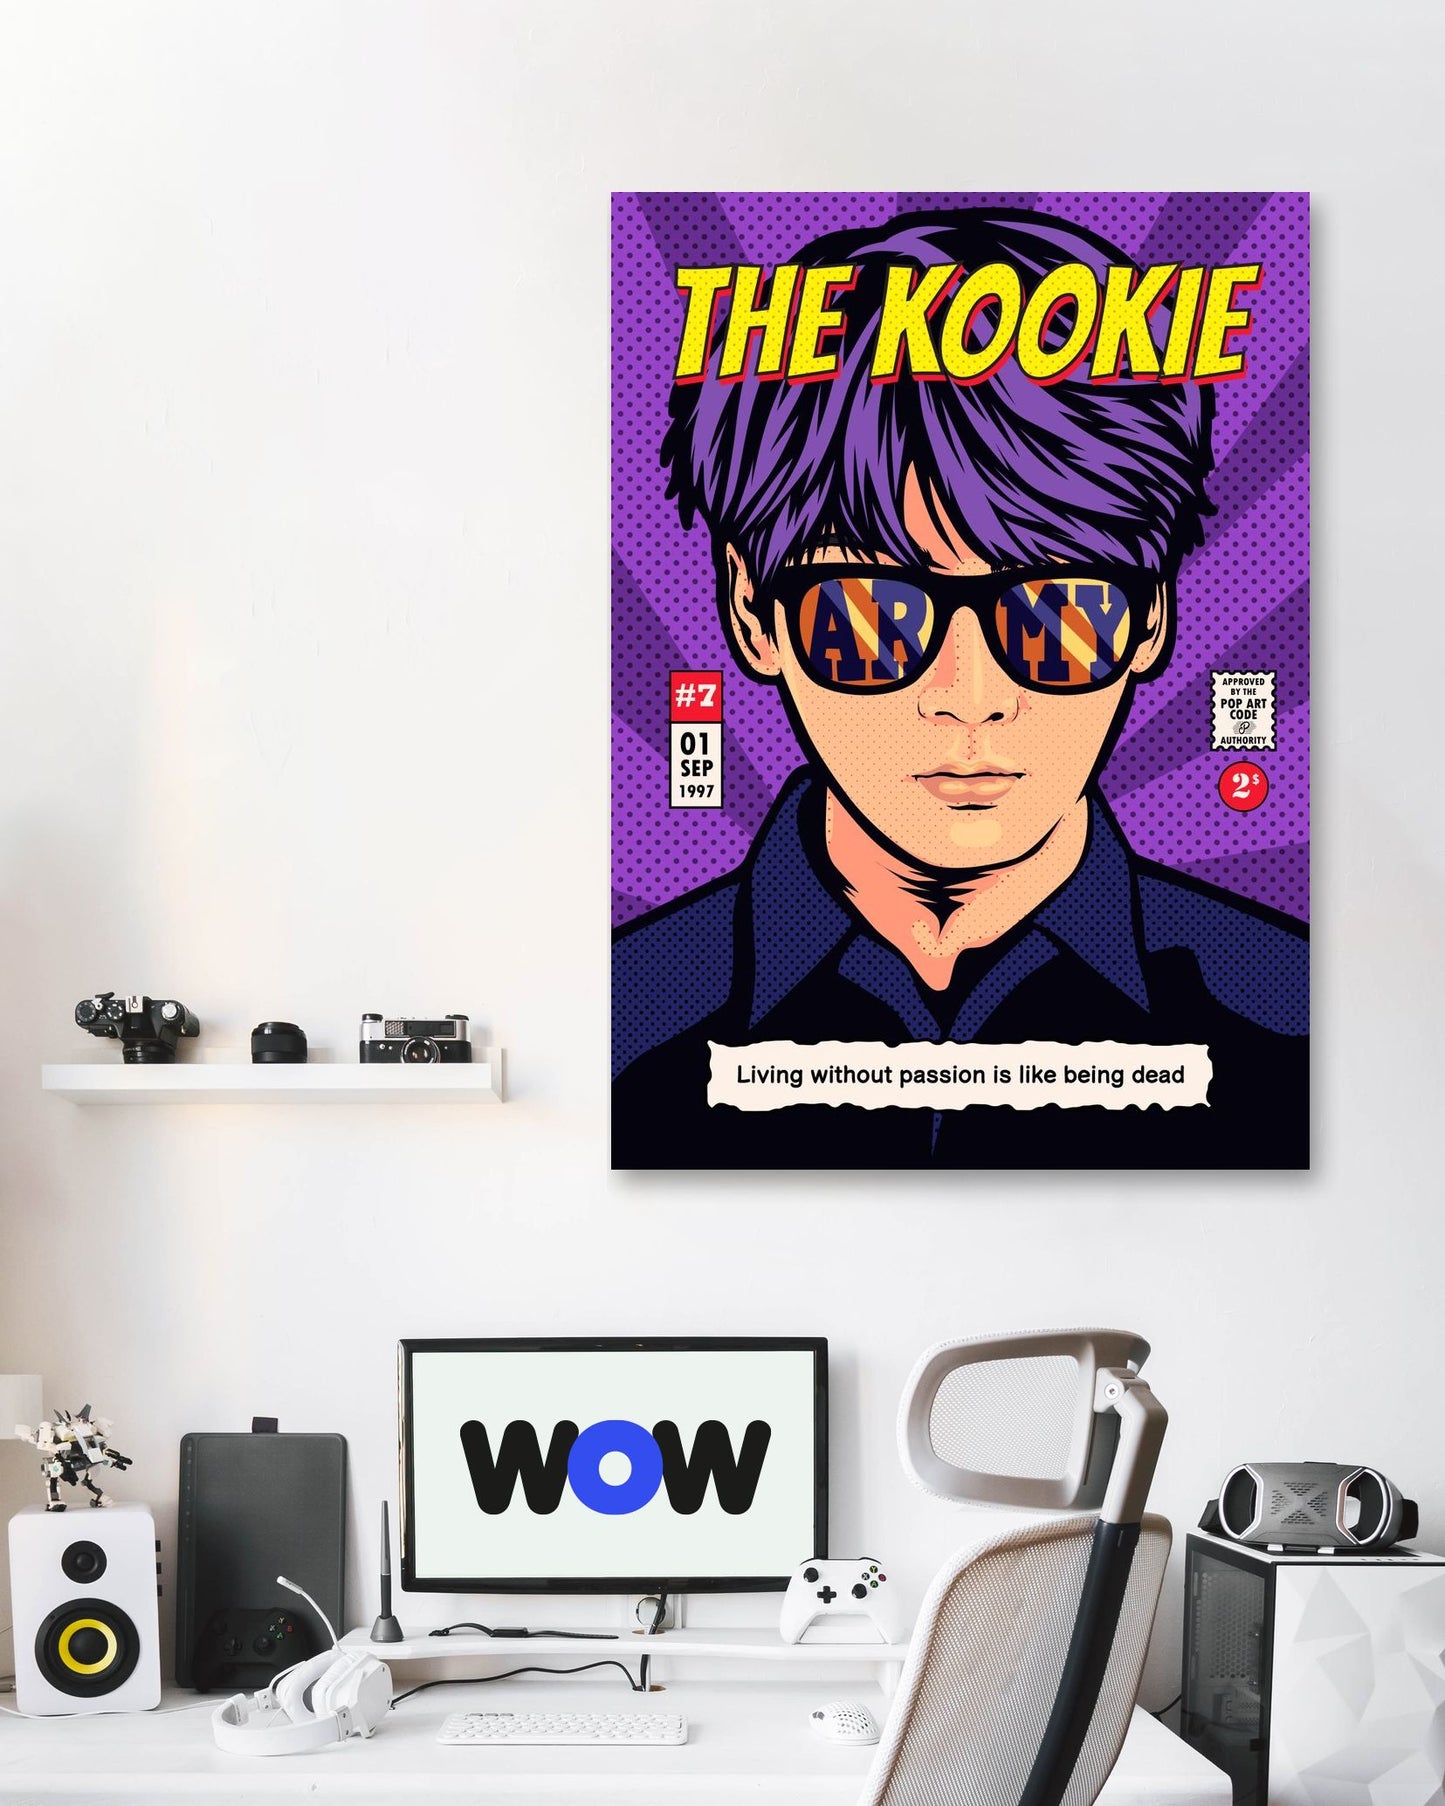 The Kookie Pop Art - @vectorheroes